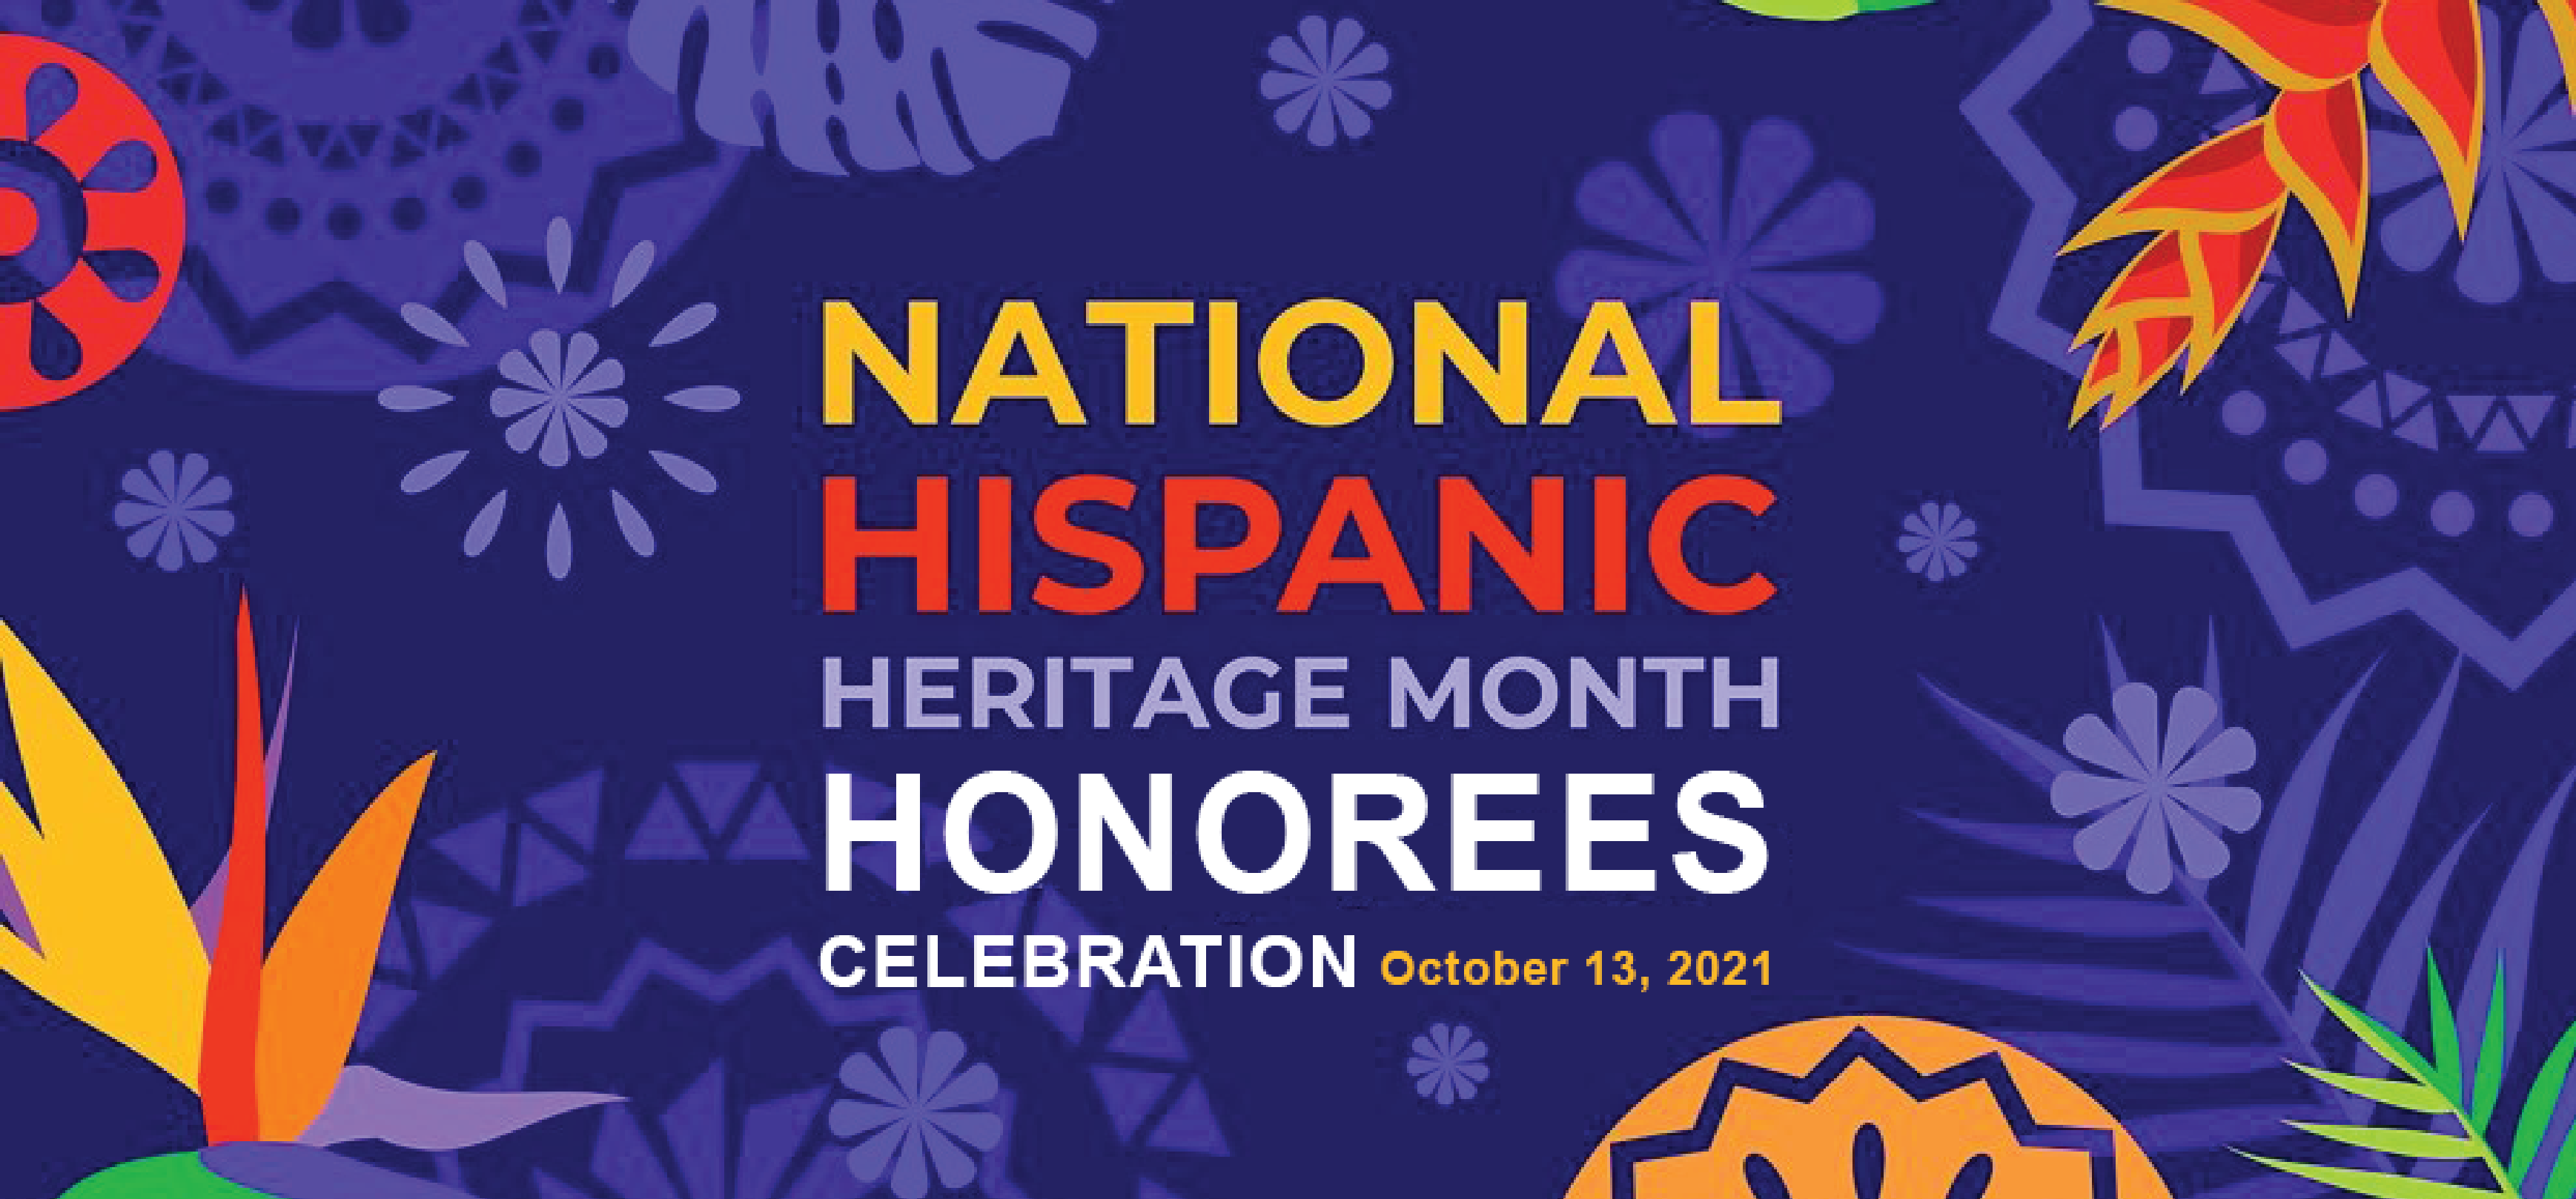 Celebration of Hispanic Heritage Month Honorees  | HCC Event